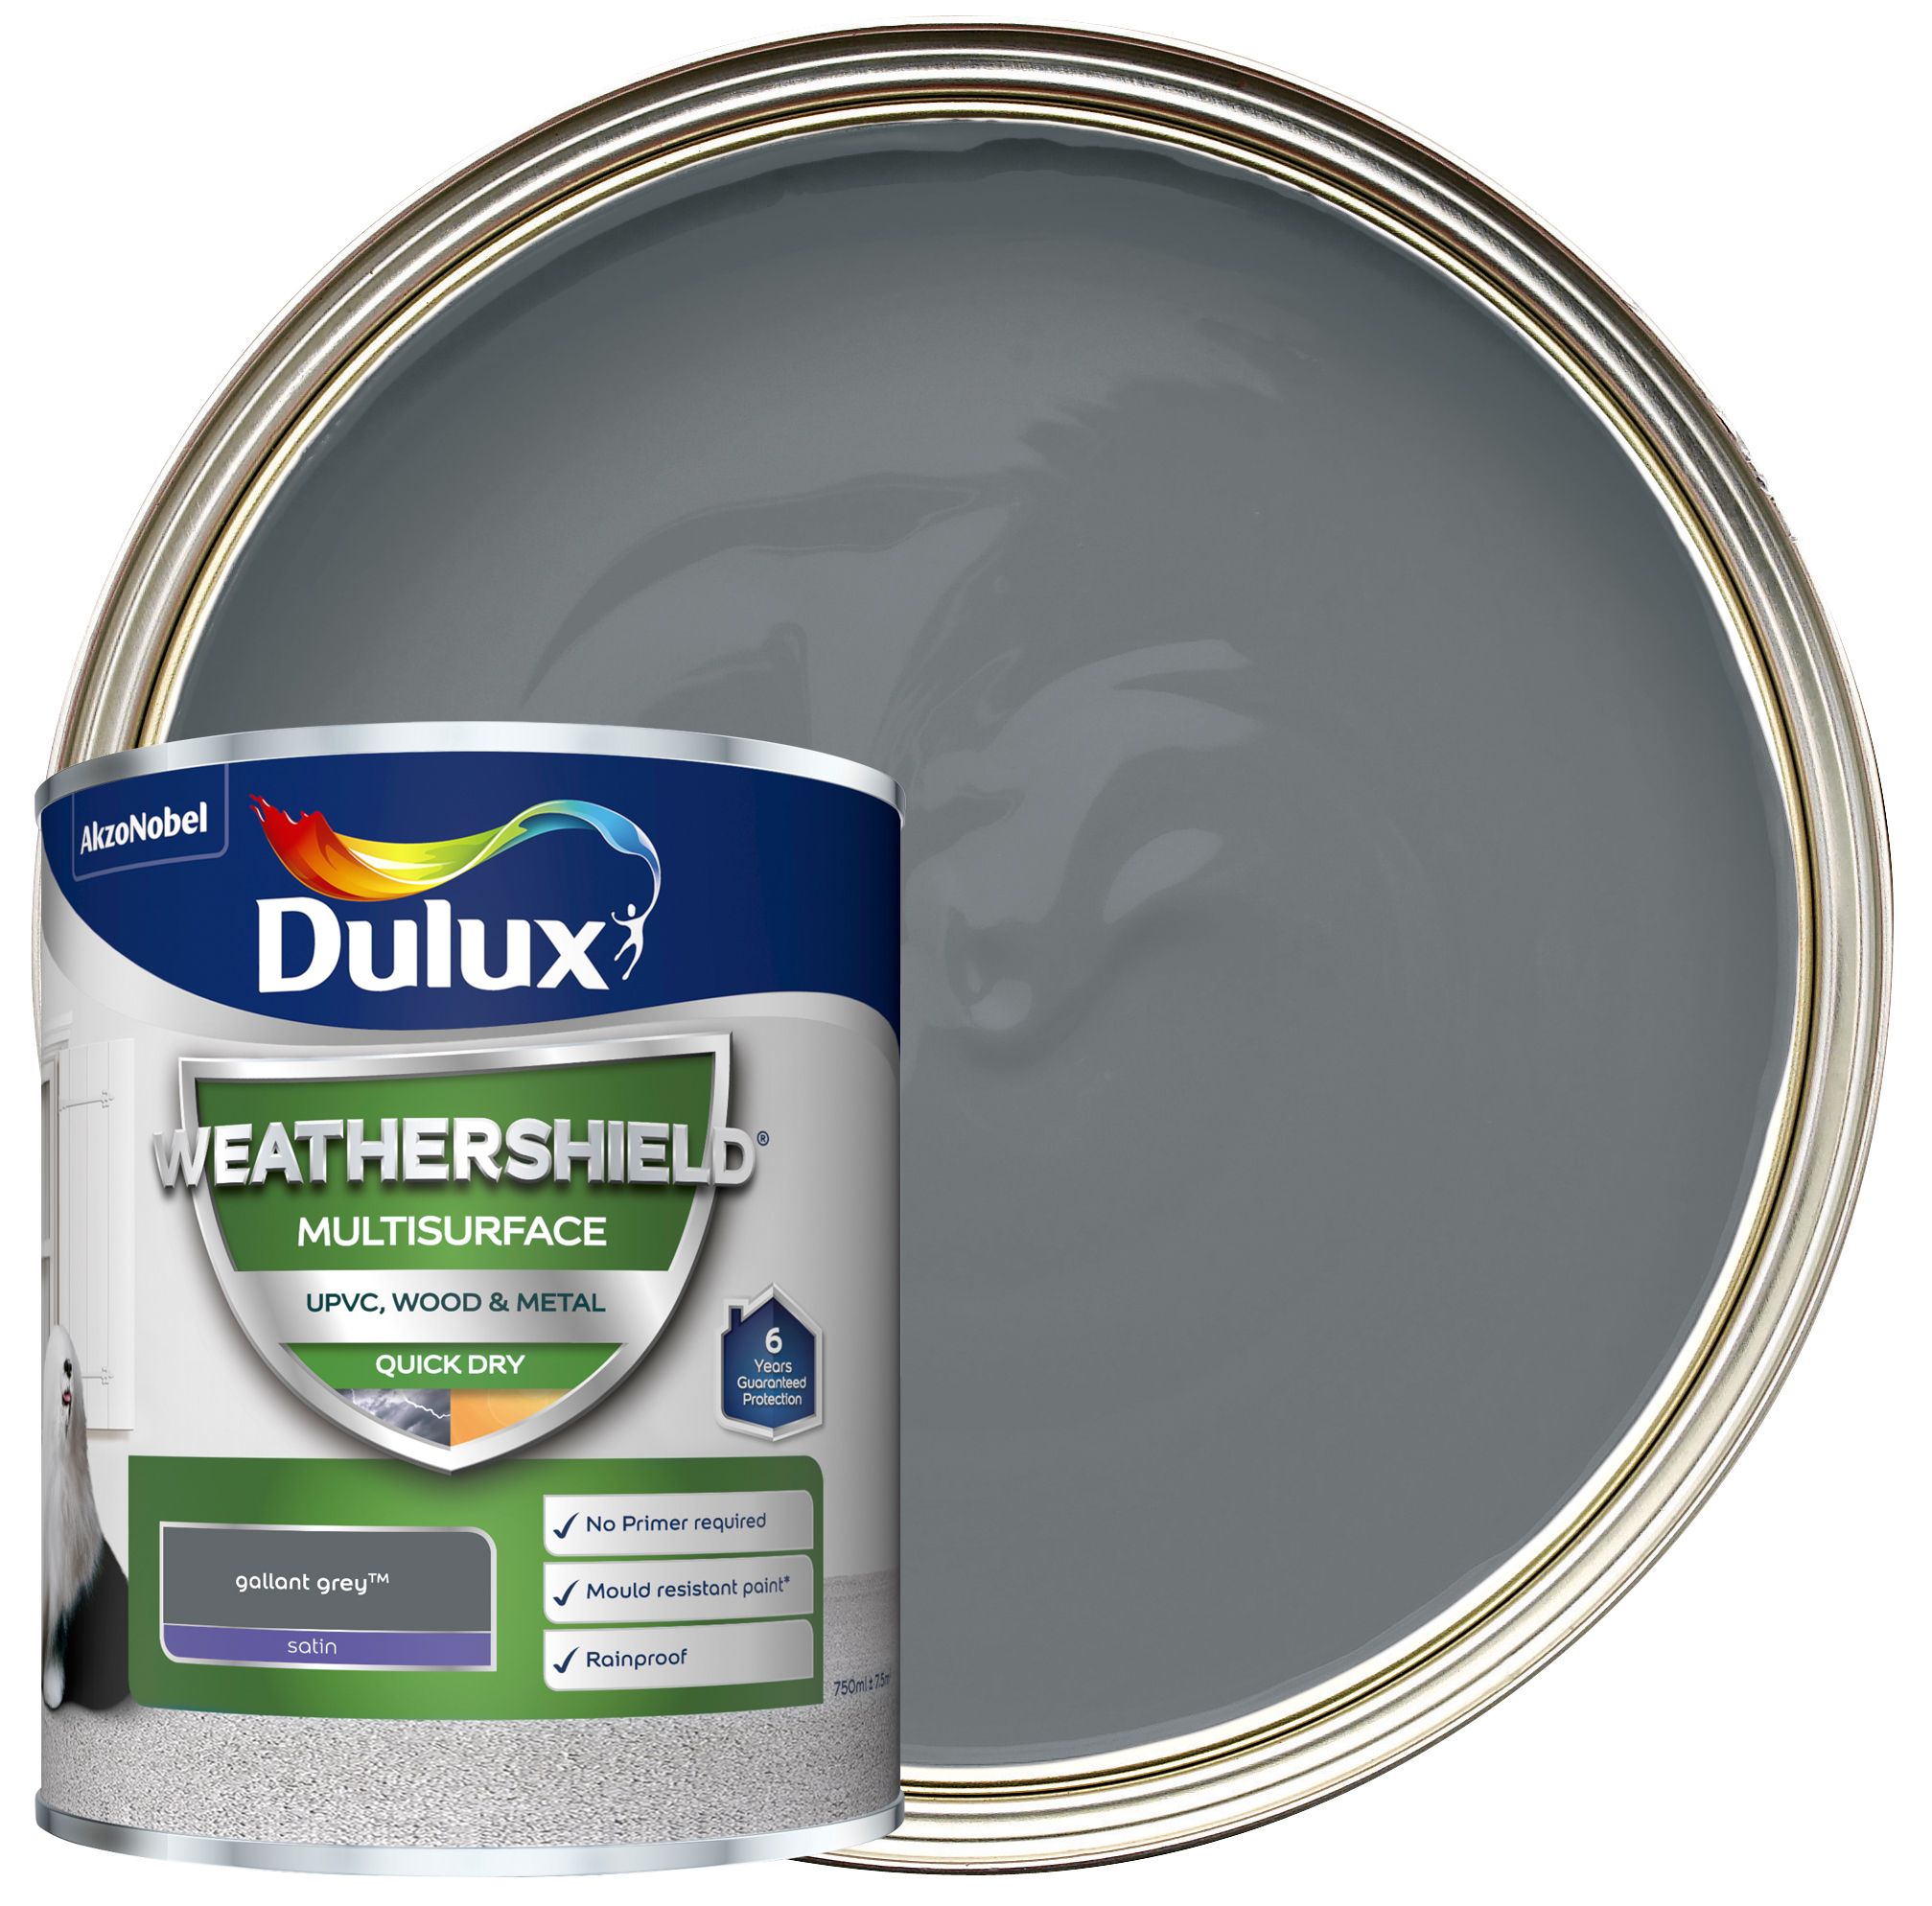 Image of Dulux Weathershield Multi Surface Paint - Gallant Grey - 750ml